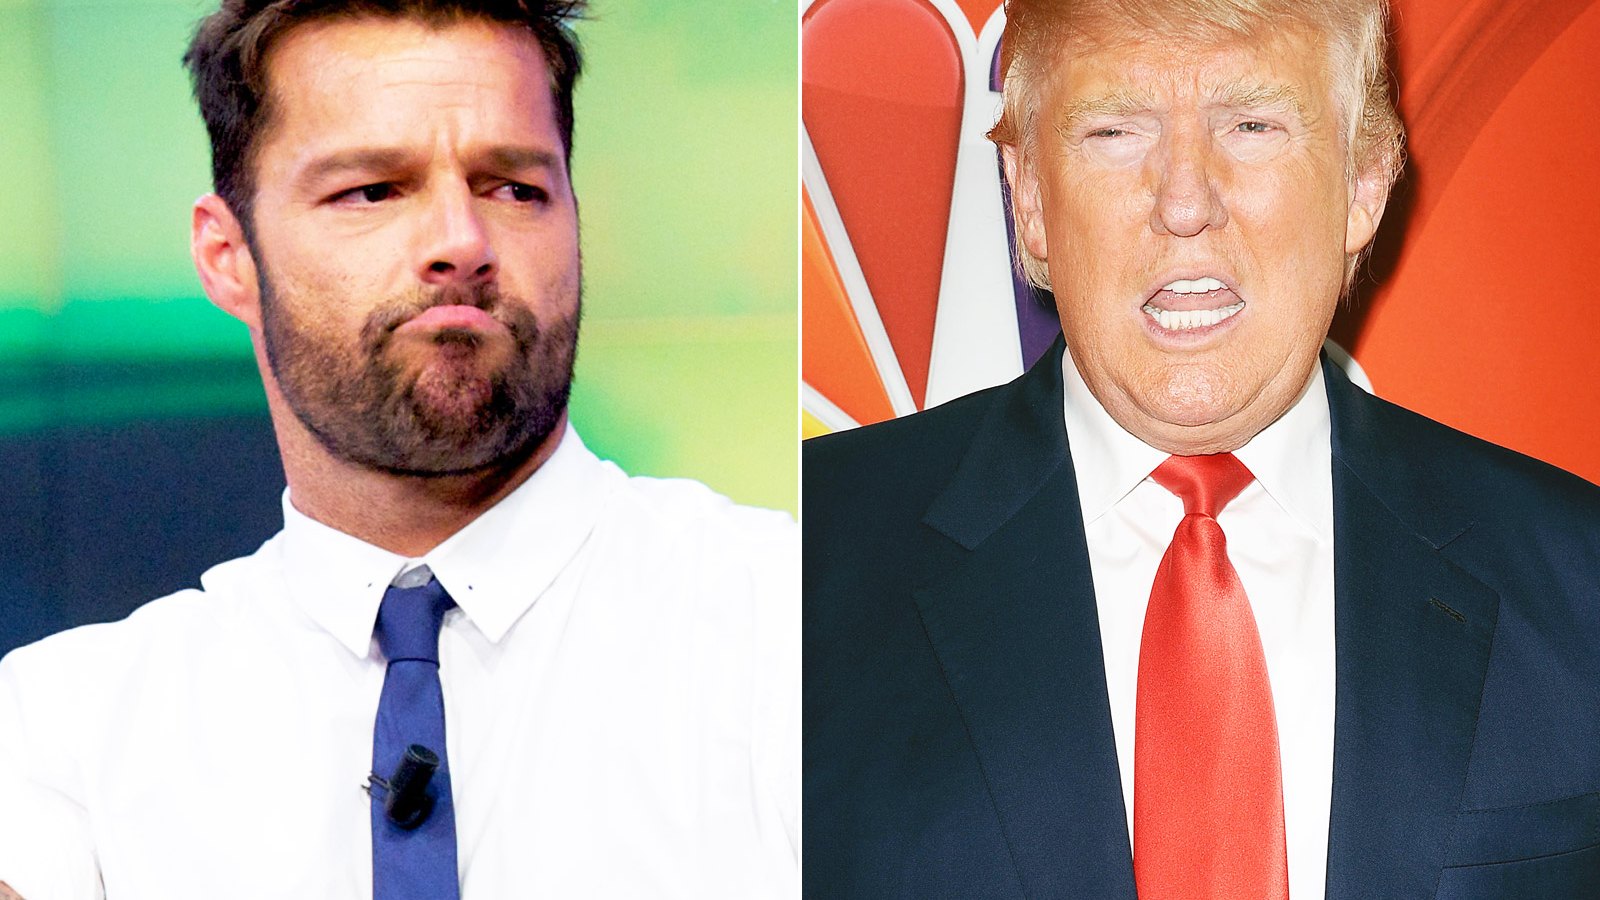 Ricky Martin and Donald Trump